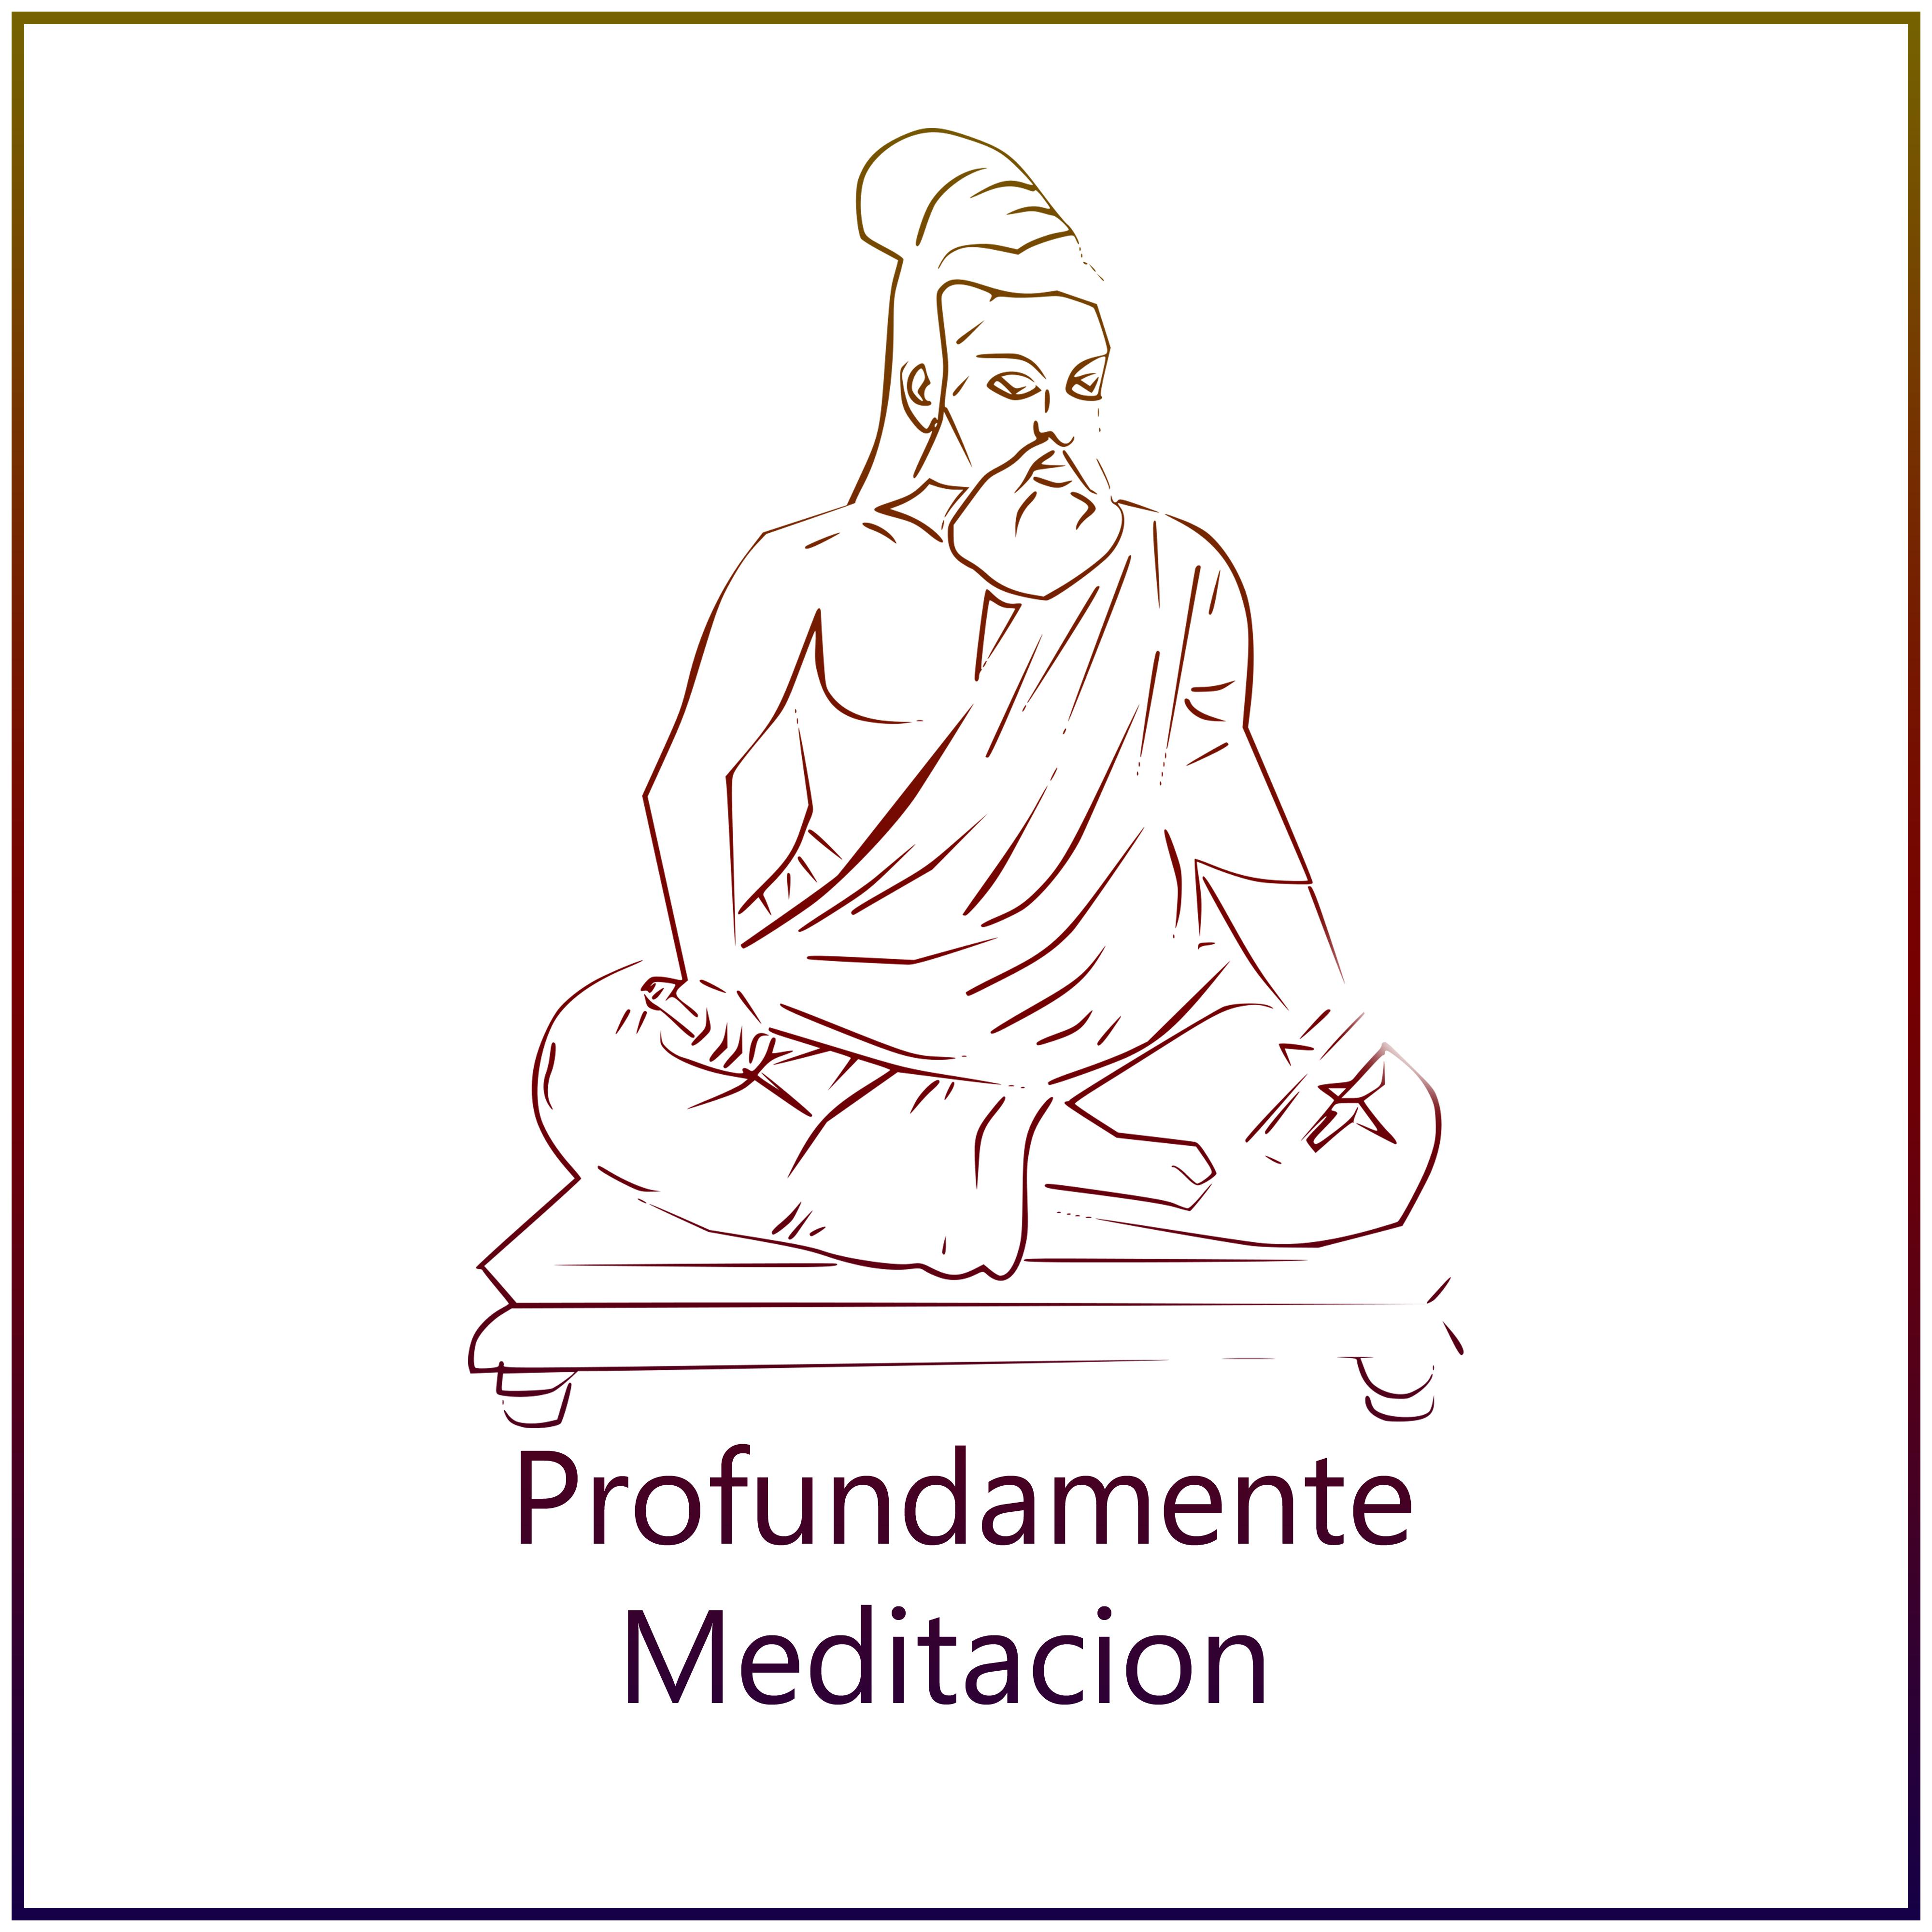 Profundamente Meditacion – Hatha Yoga, New Age 2017, Chill Meditation, Healing Zen, Sleep Meditation, Nature Sounds